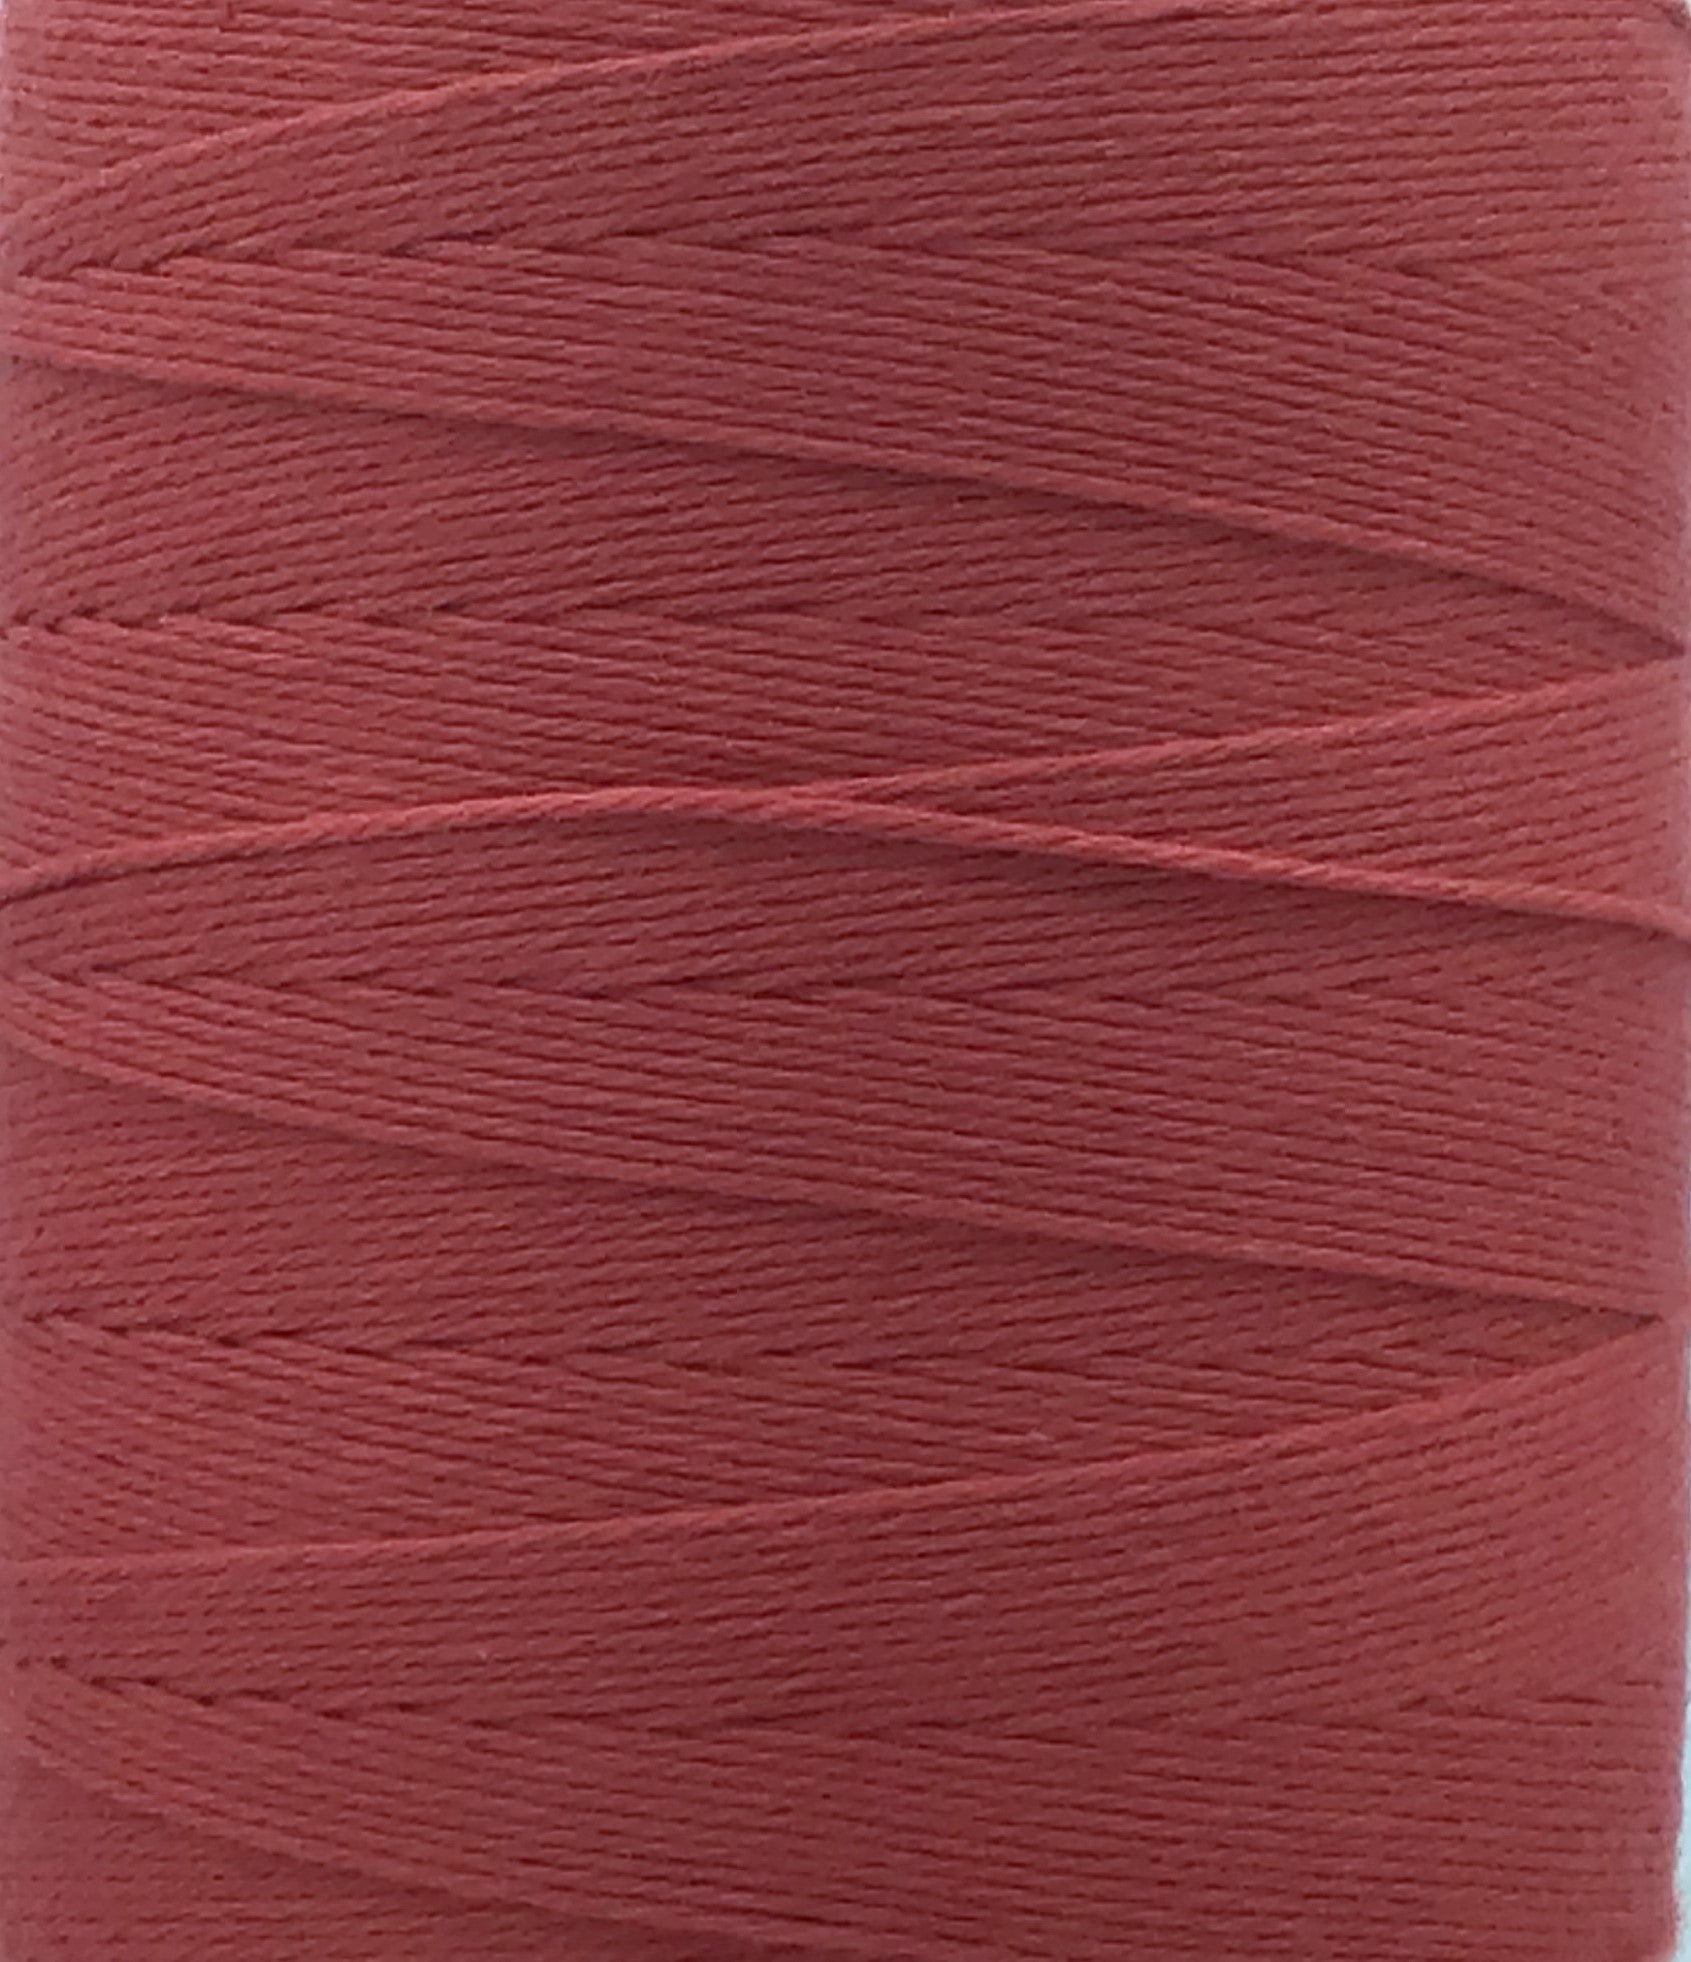 100% coton 4/8 - 100% Cotton Yarn 8/4